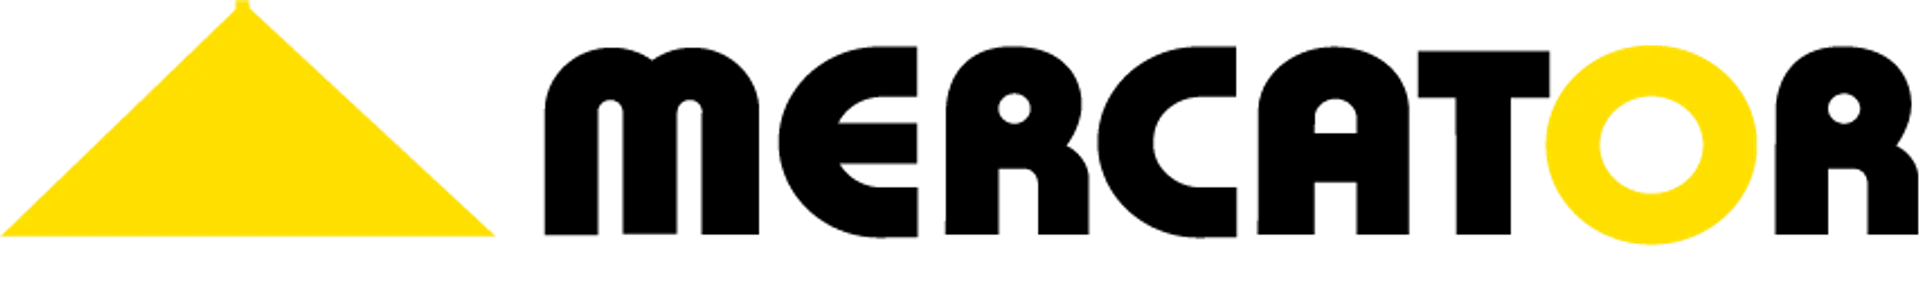 MERCATOR logo of current catalogue